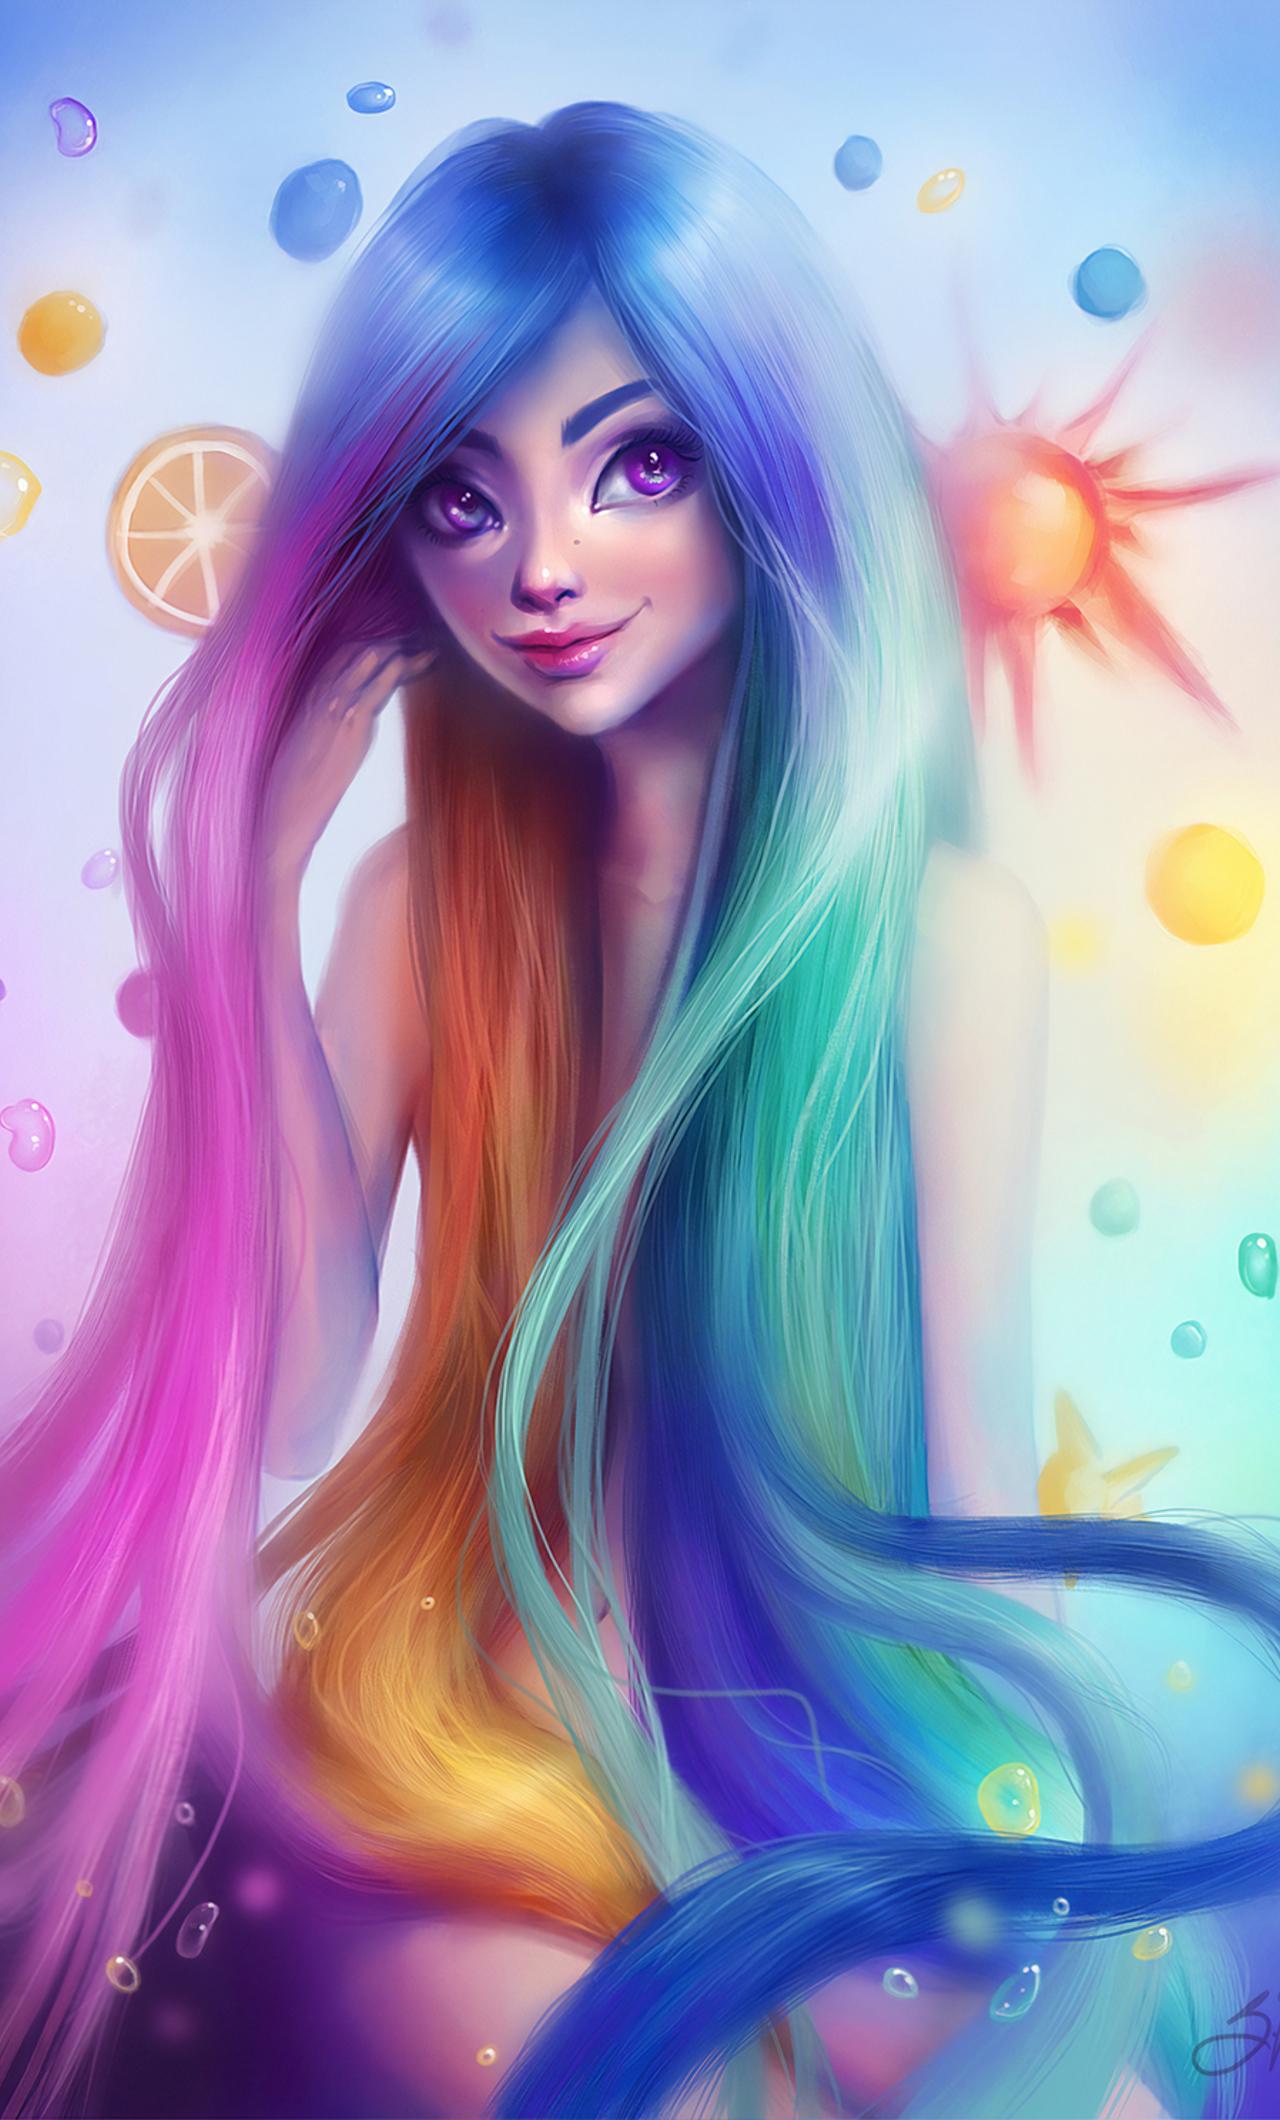 Rainbow Hair Girl iPhone HD 4k Wallpaper, Image